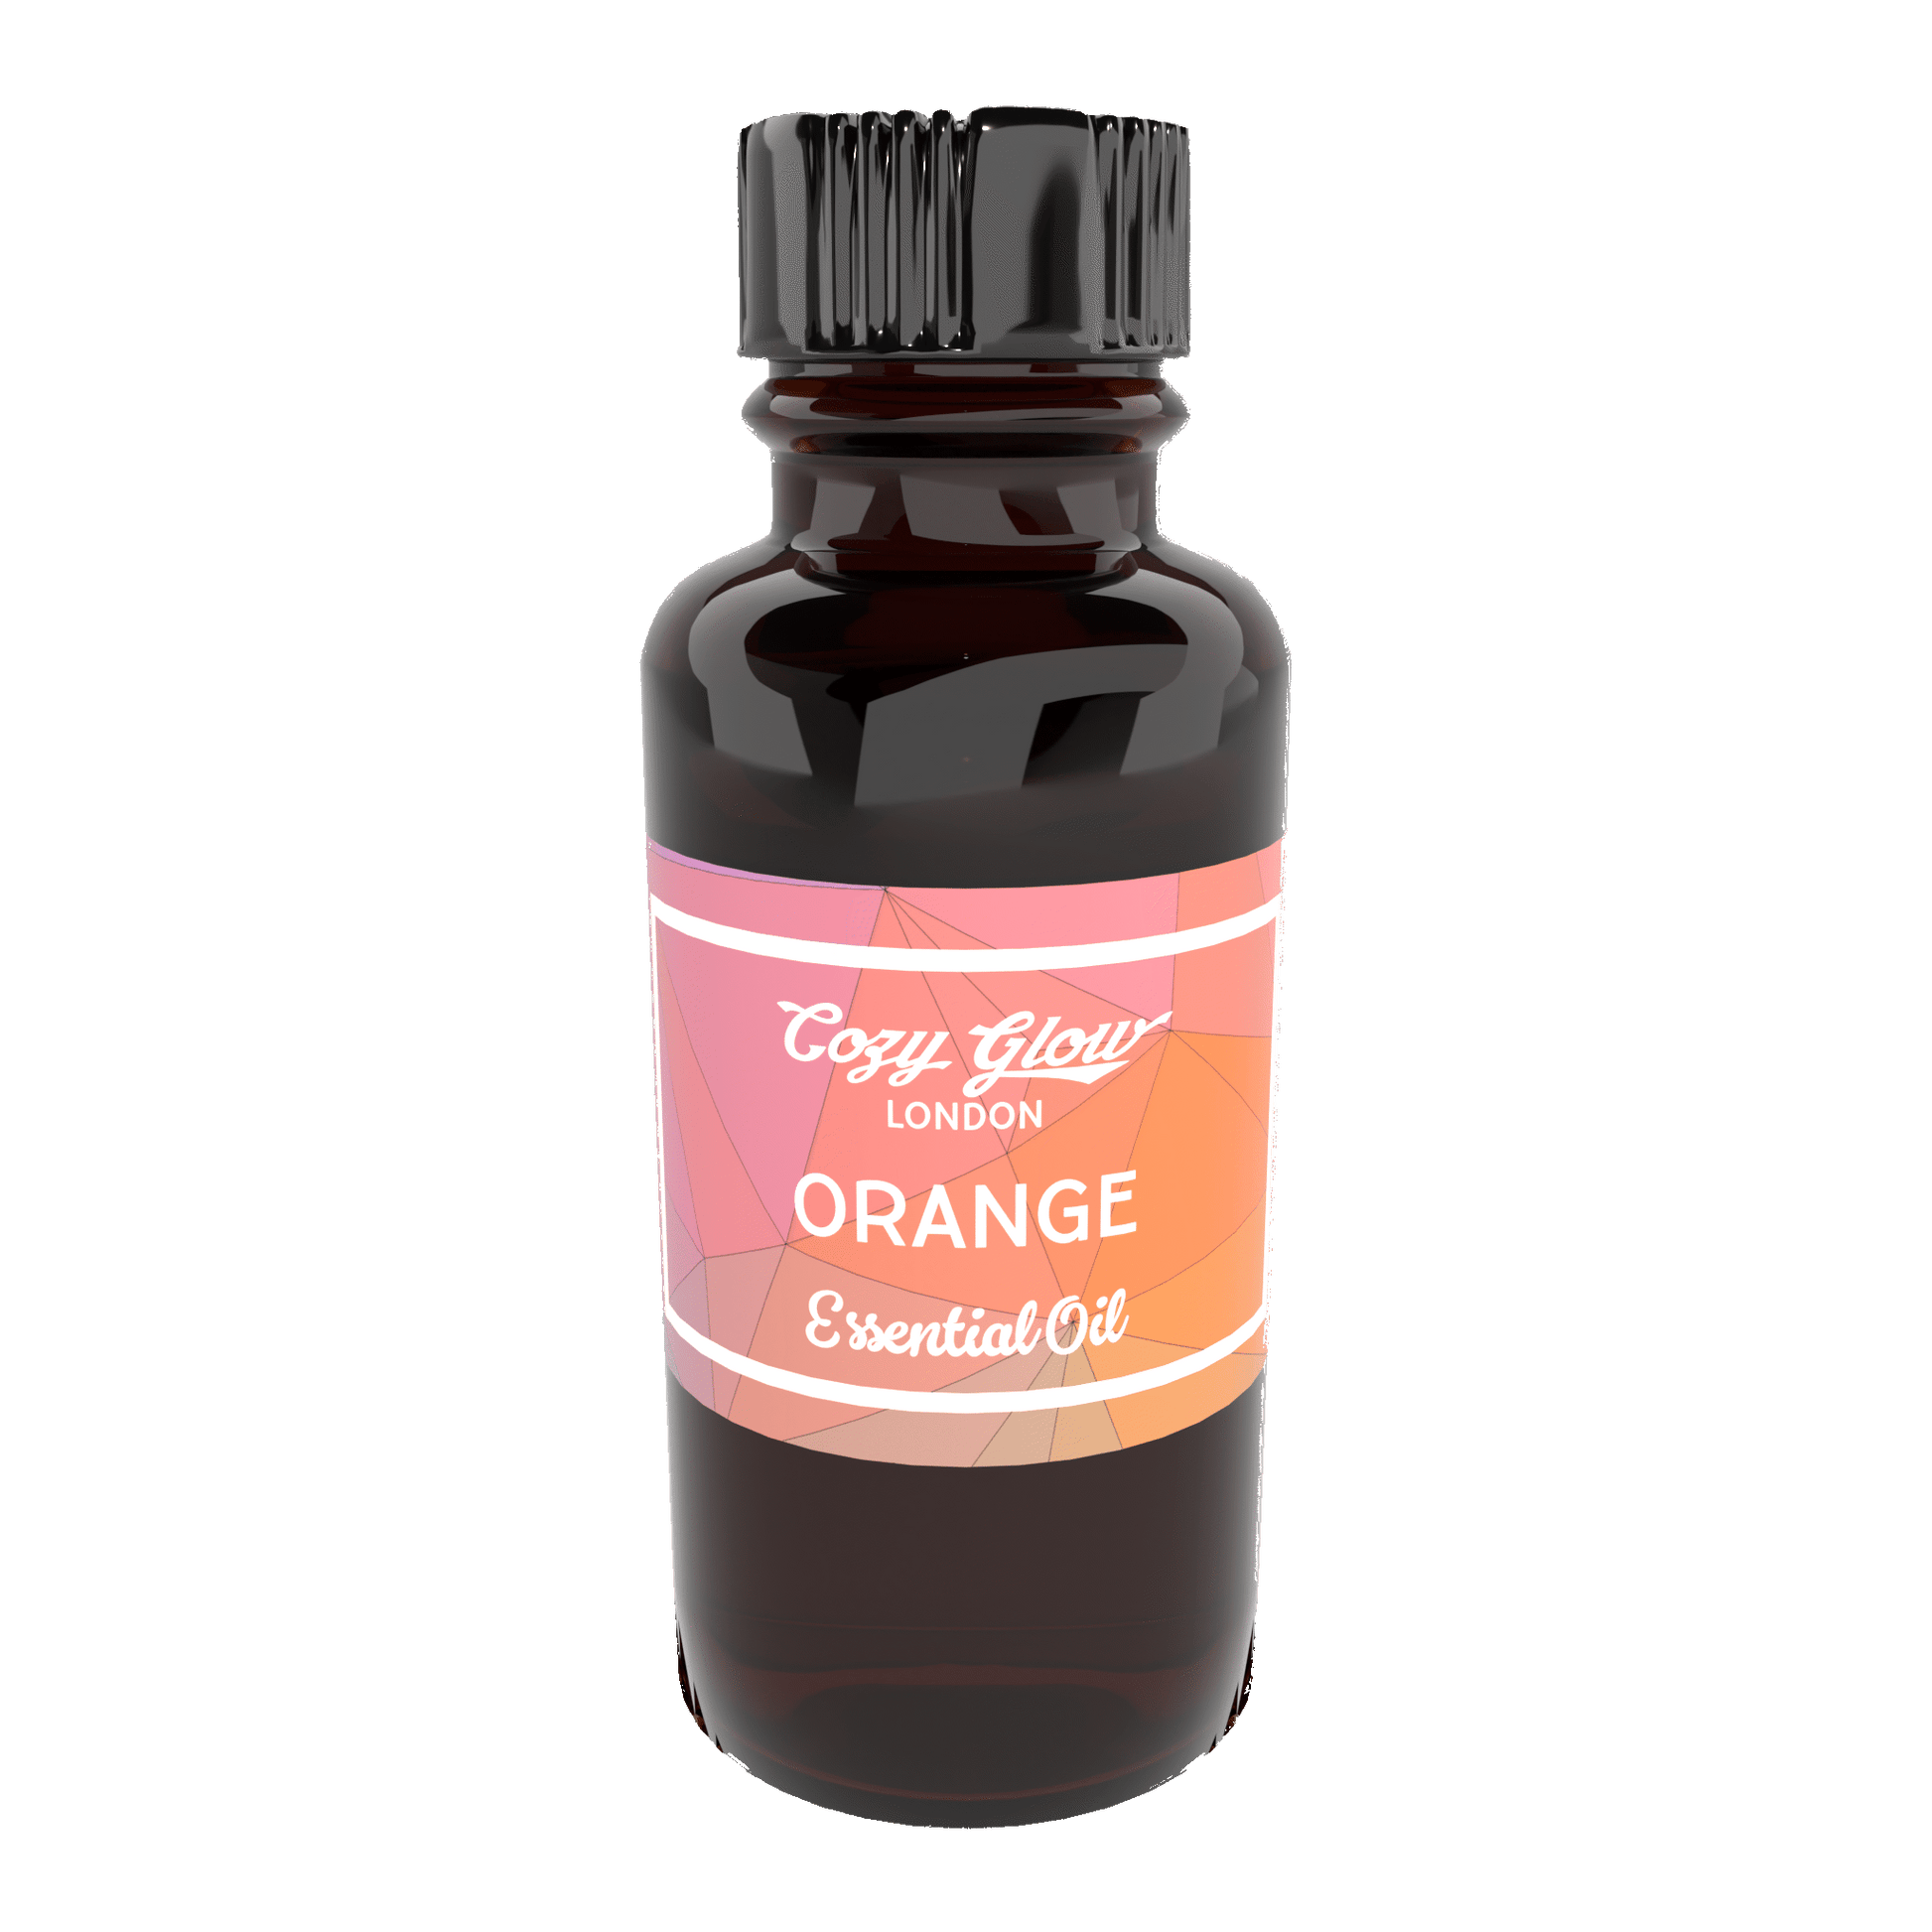 Cozy Glow Orange 10 ml Essential Oil